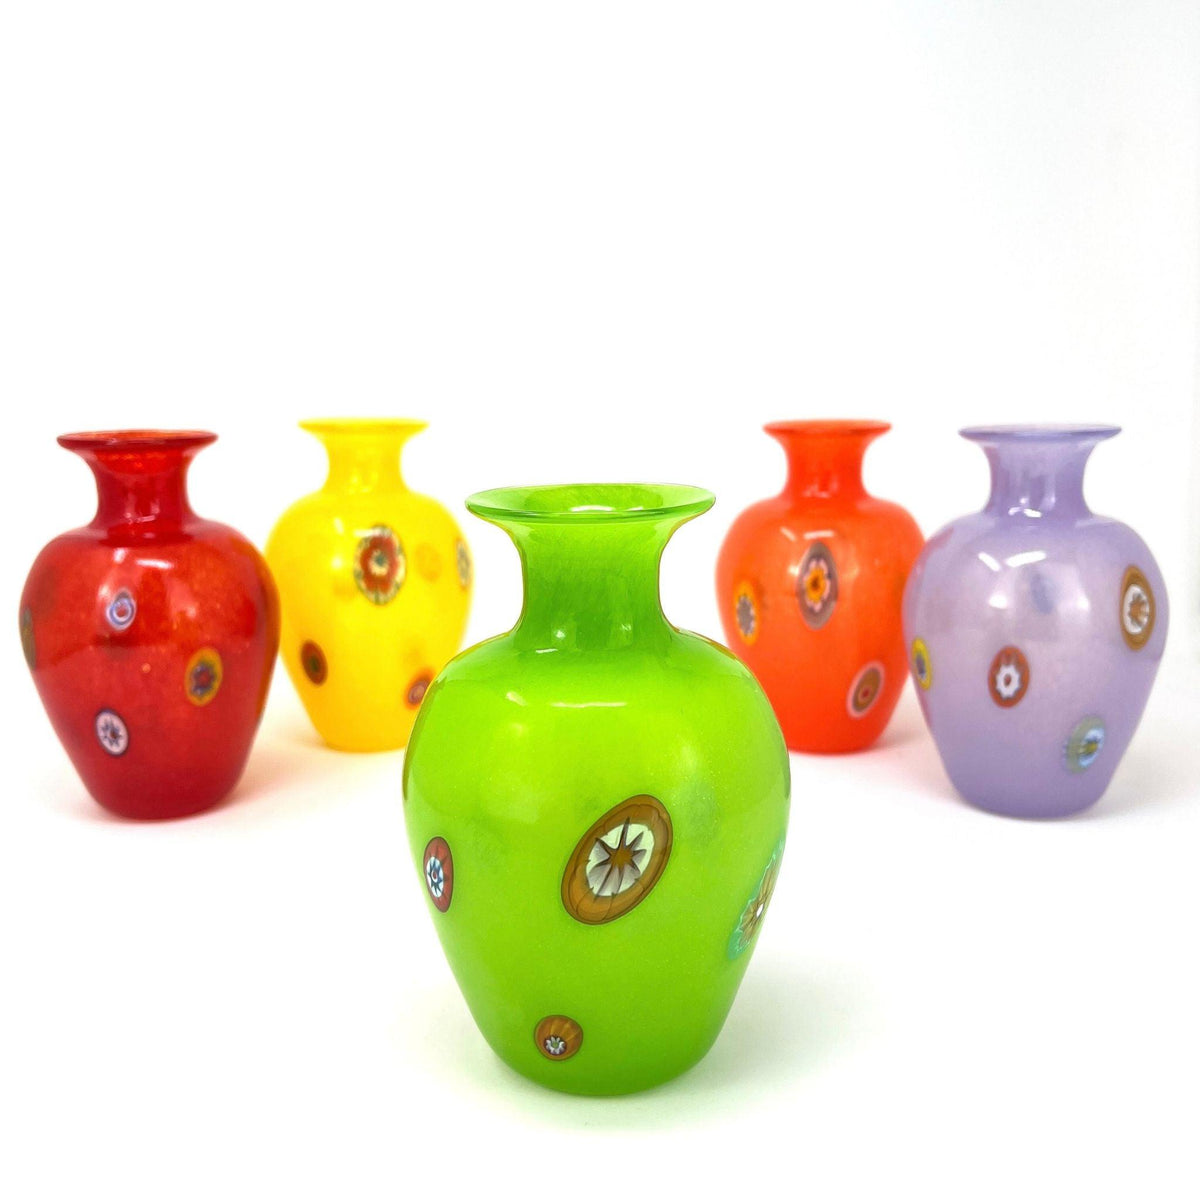 Amphora Small Vase, Handblown Millefiori Murano Glass, Made in Italy at MyItalianDecor